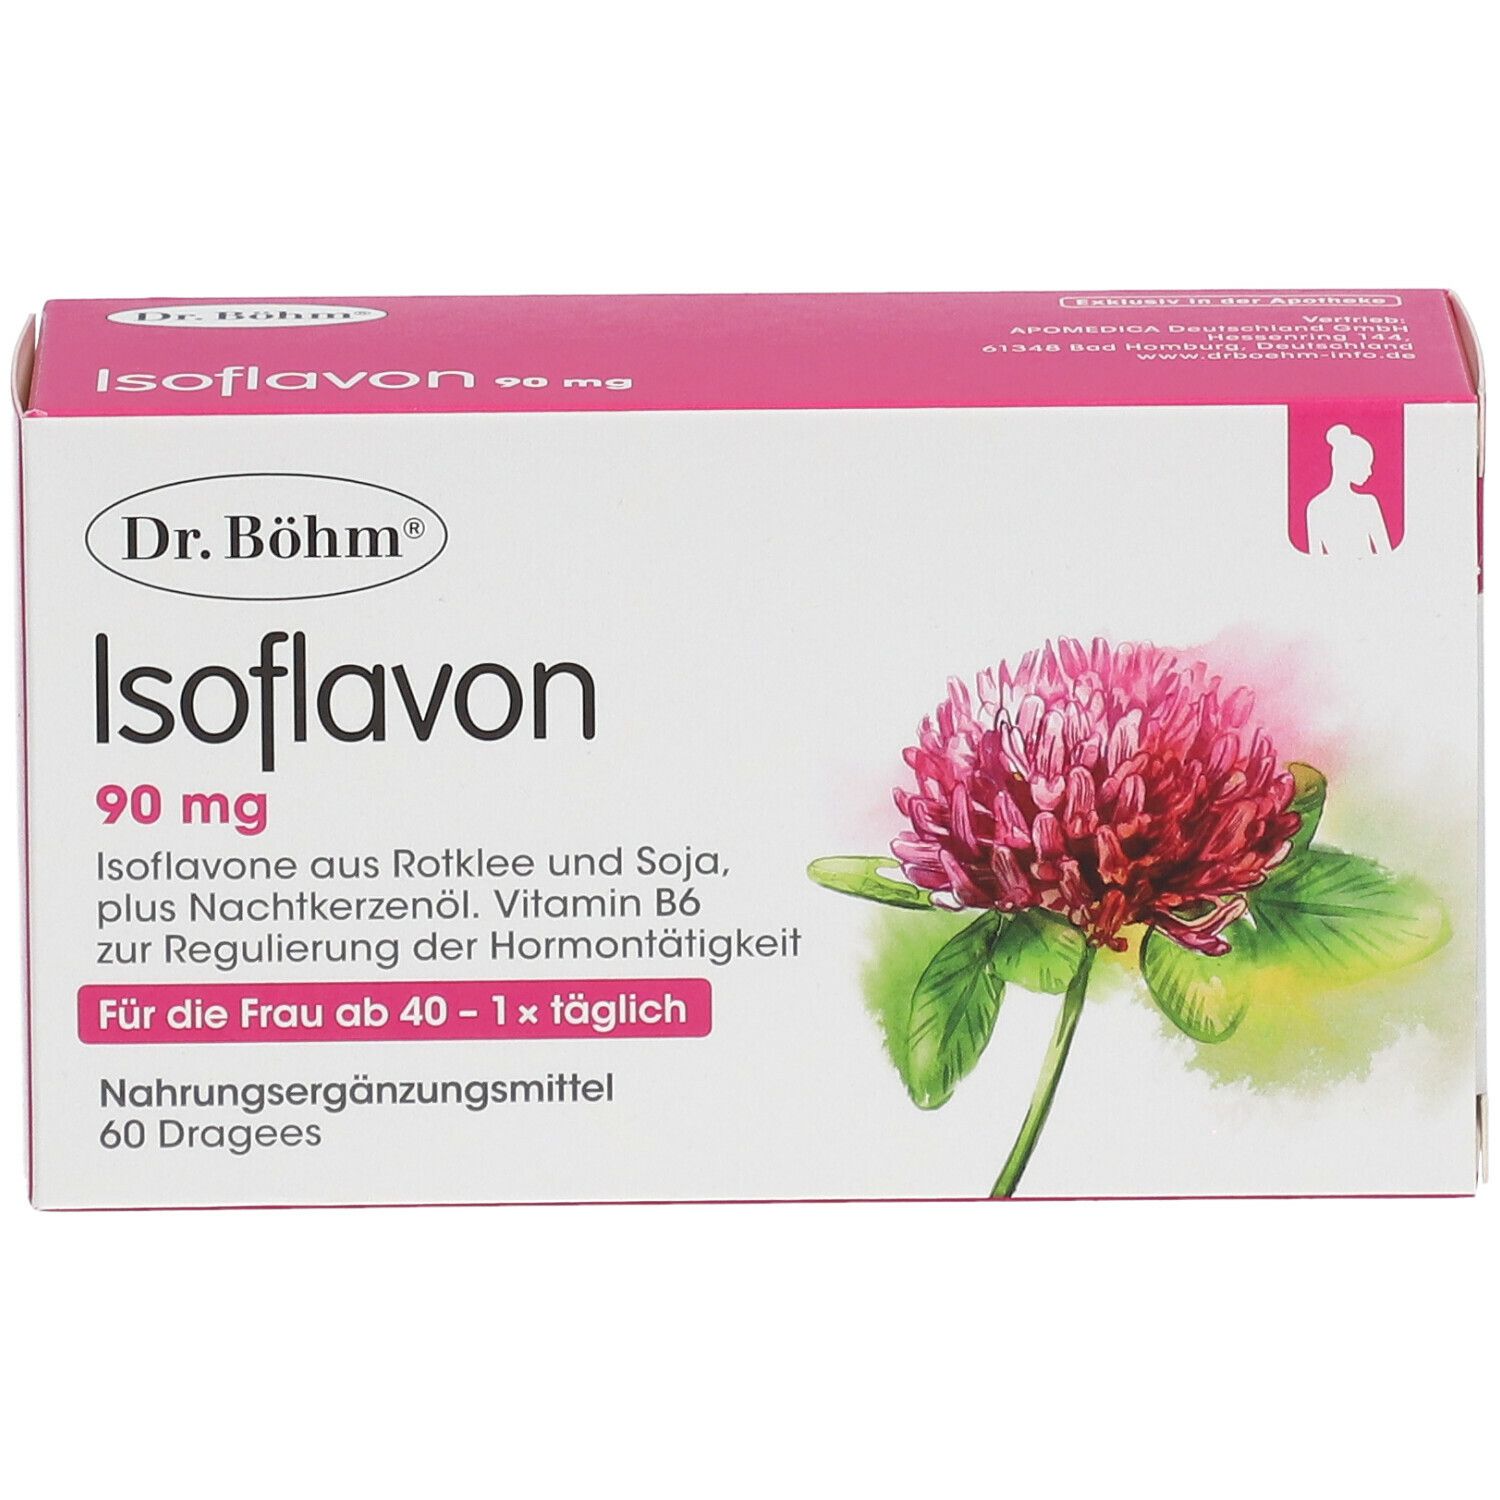 Dr. Böhm® Isoflavon 90 mg